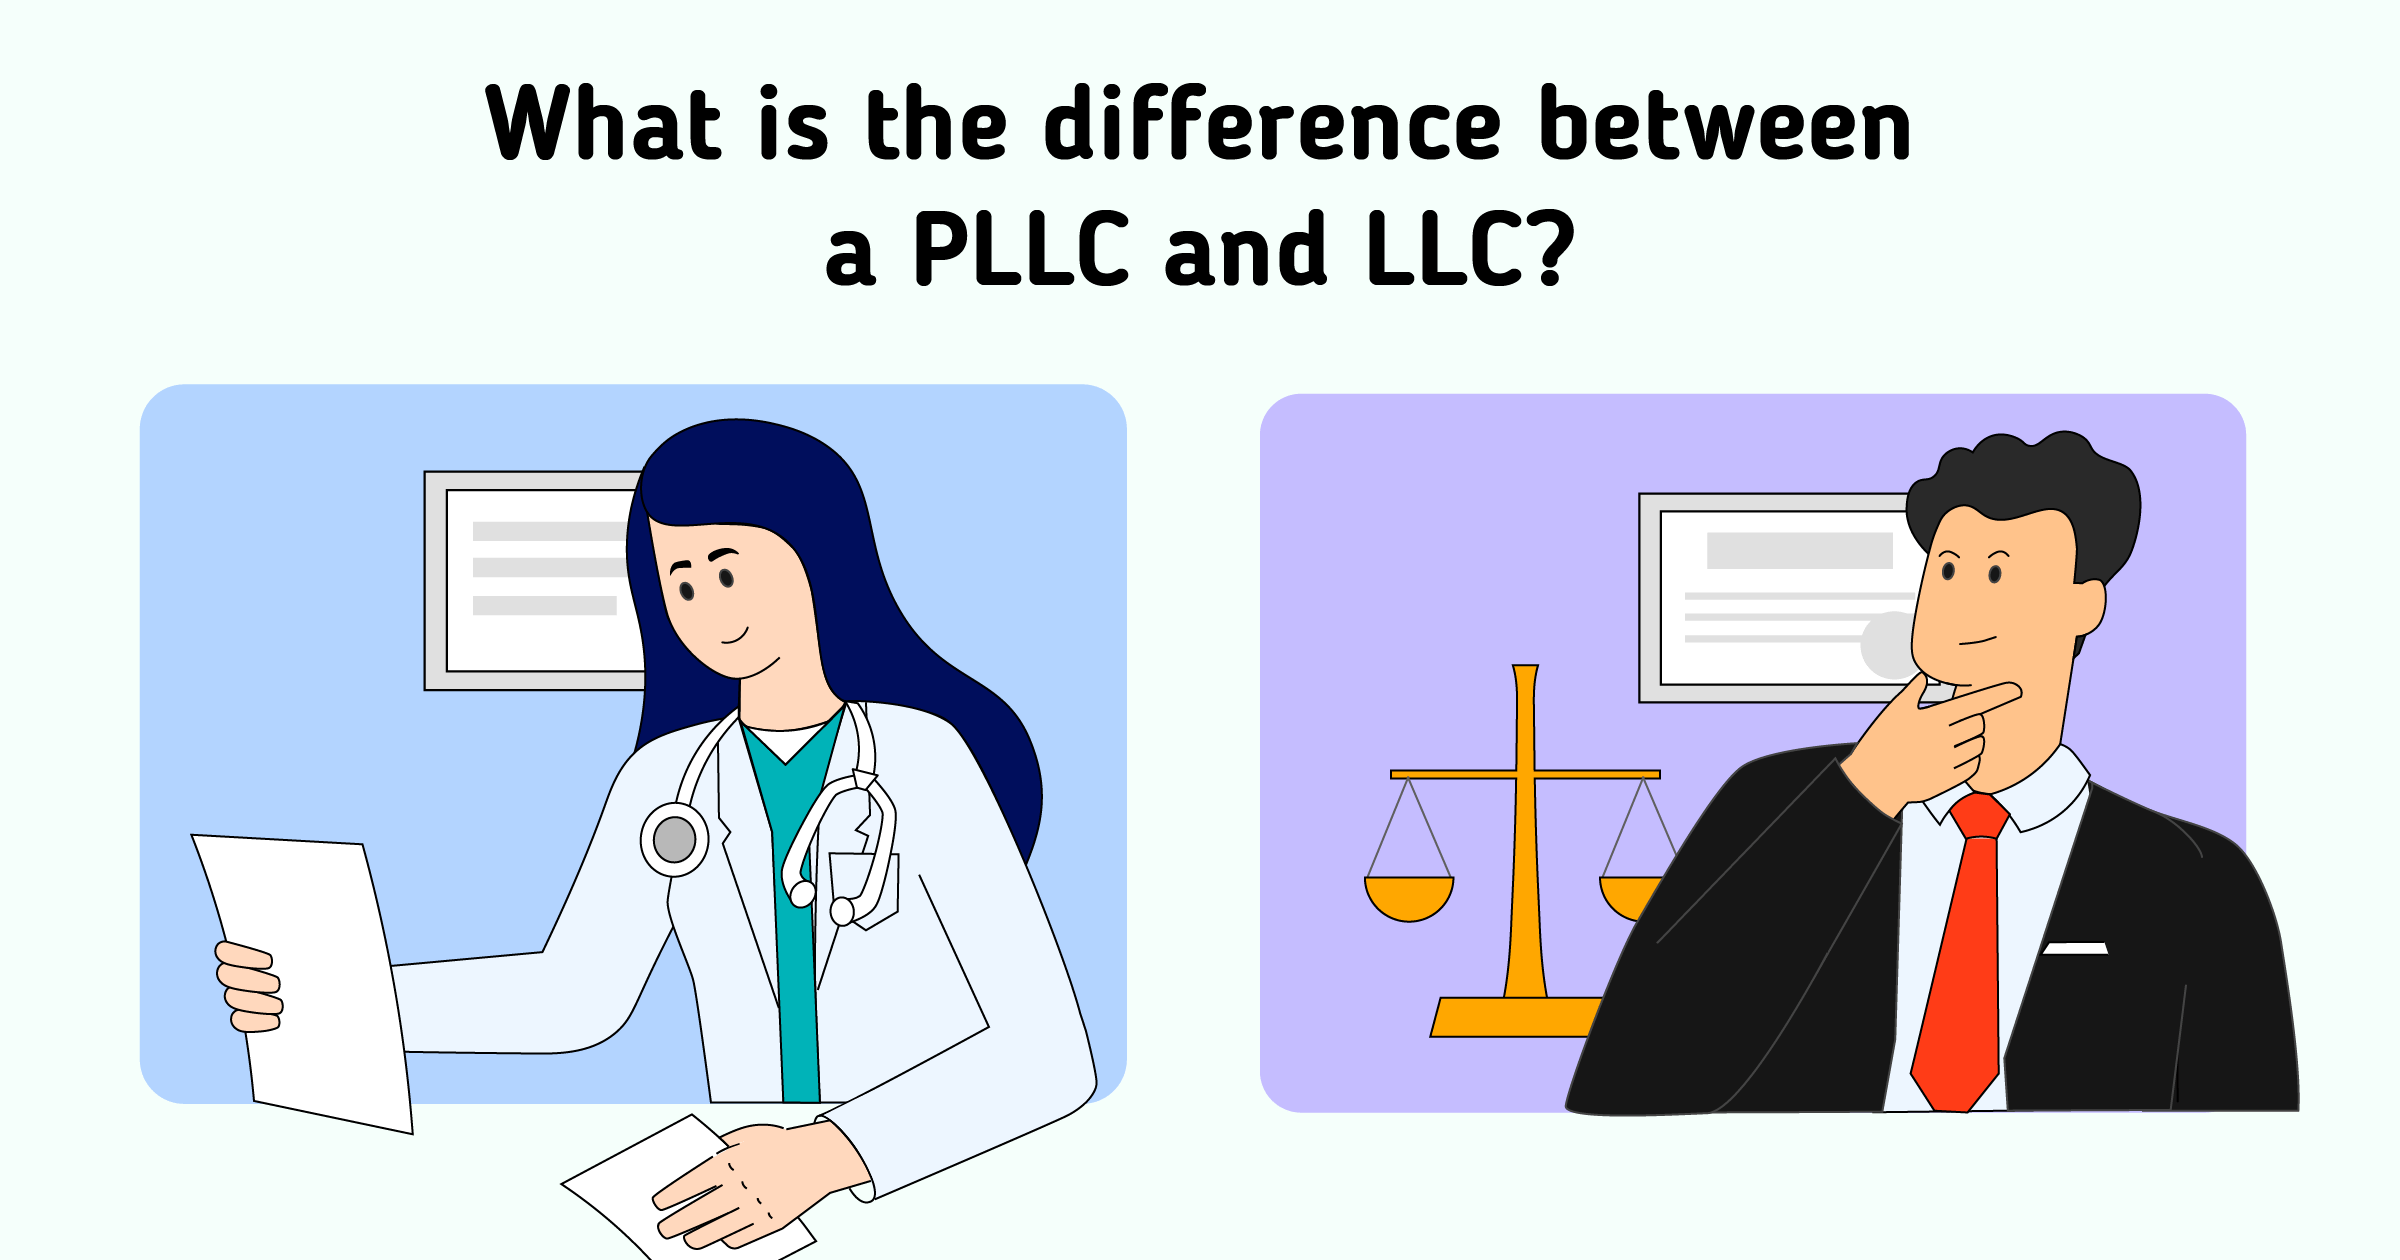 PLLC and LLC